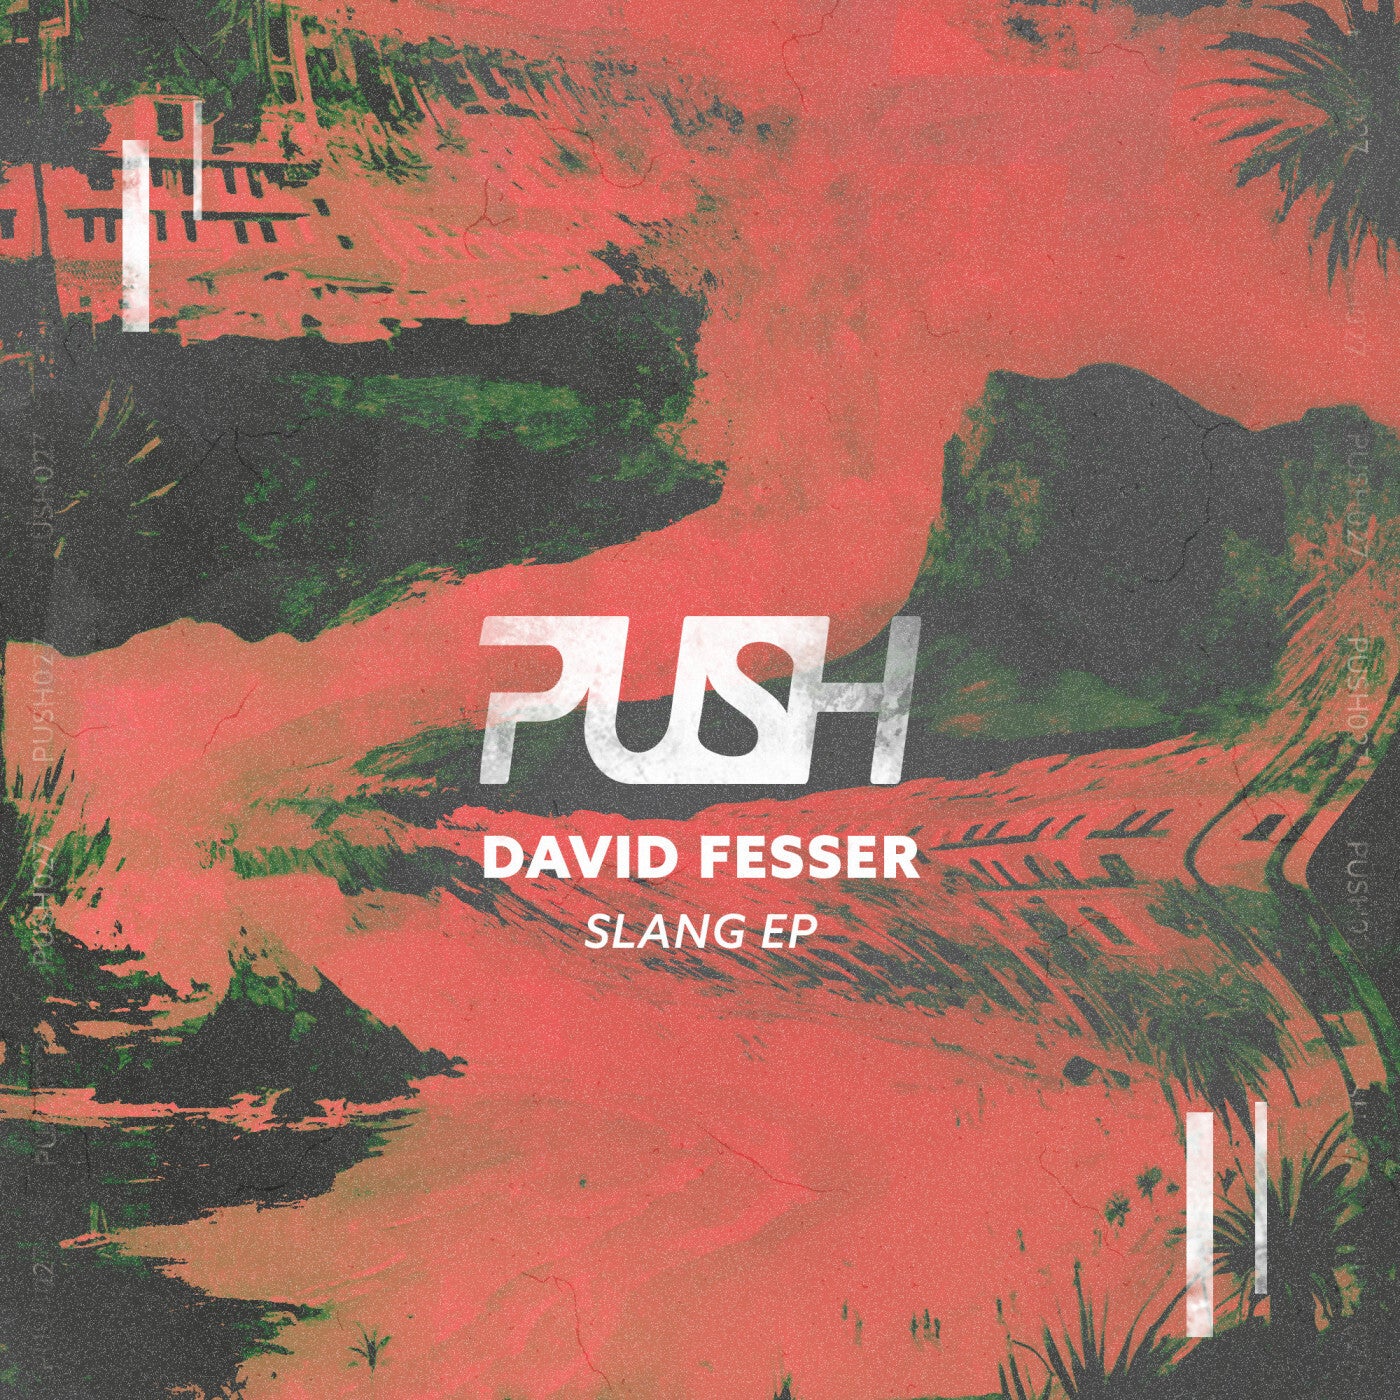 image cover: David Fesser - Slang EP on PUSH